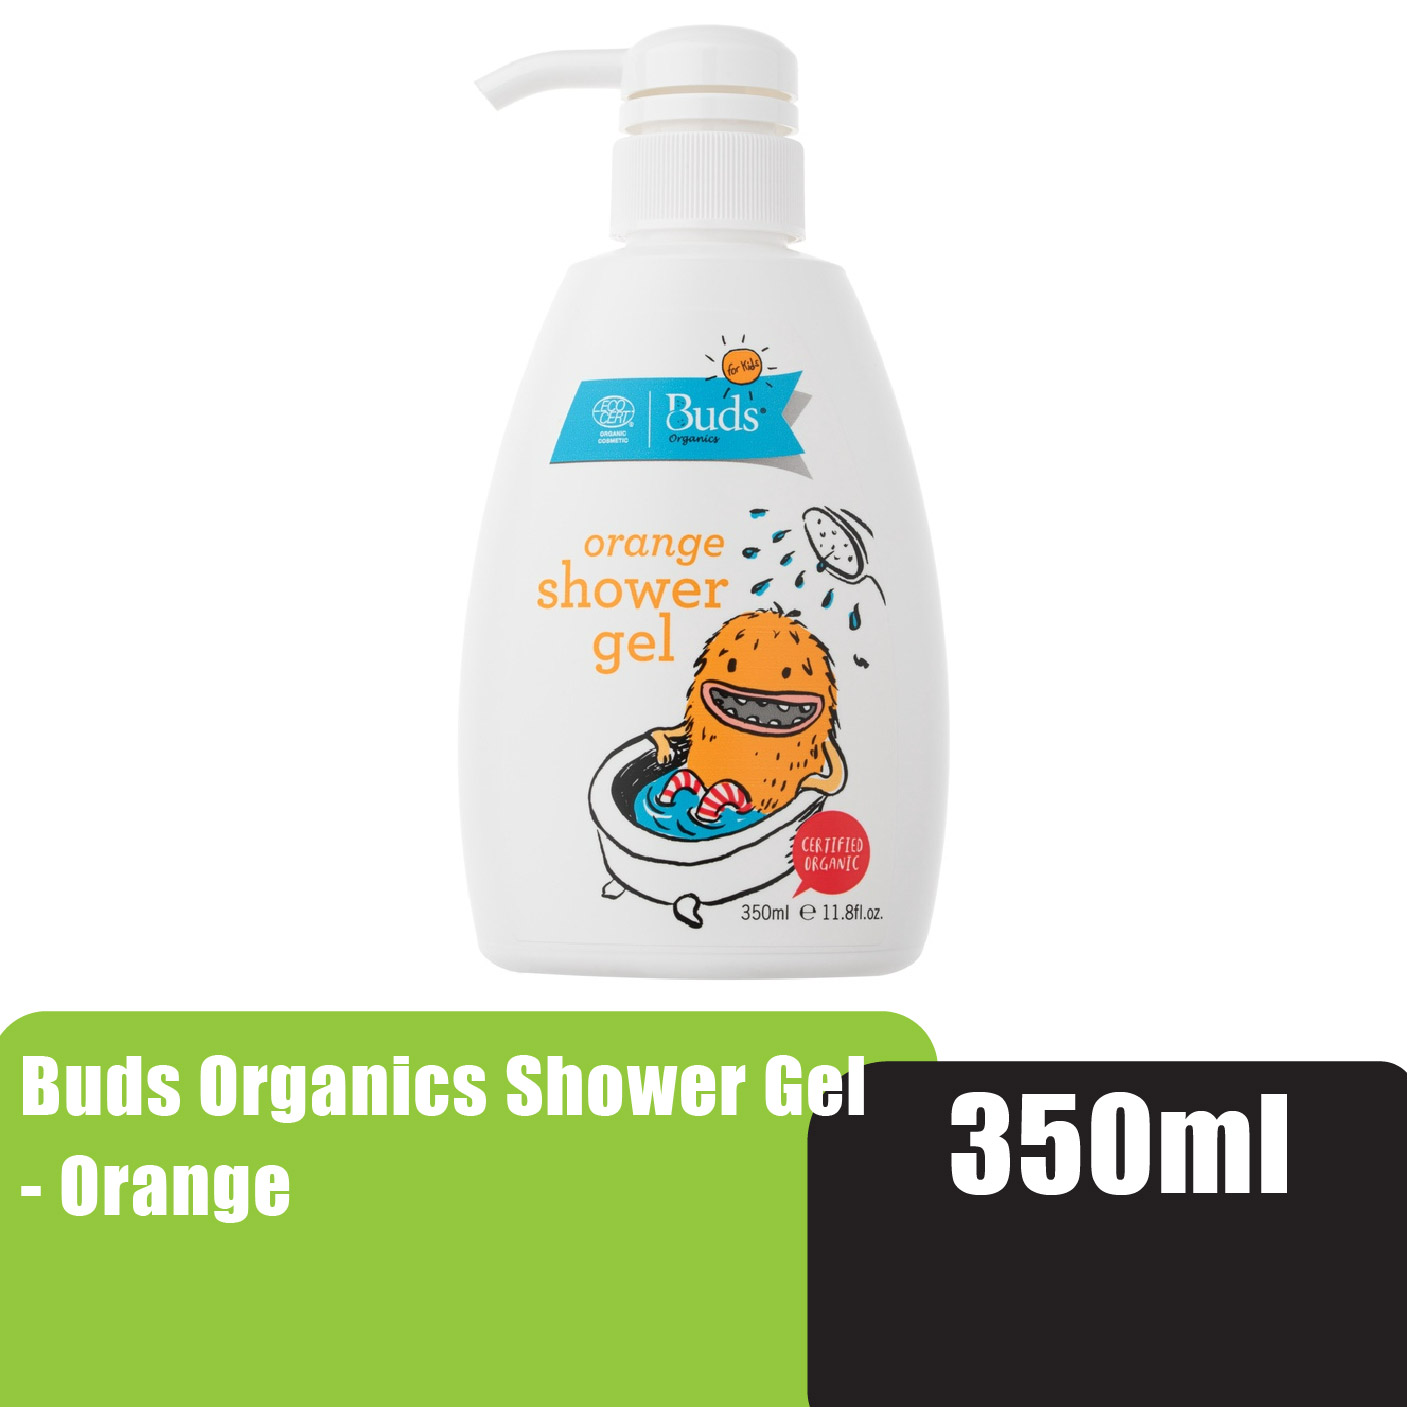 Buds Organics Orange Scented Shower Gel with Aloe vera 350ml - Hydrating & Soothing